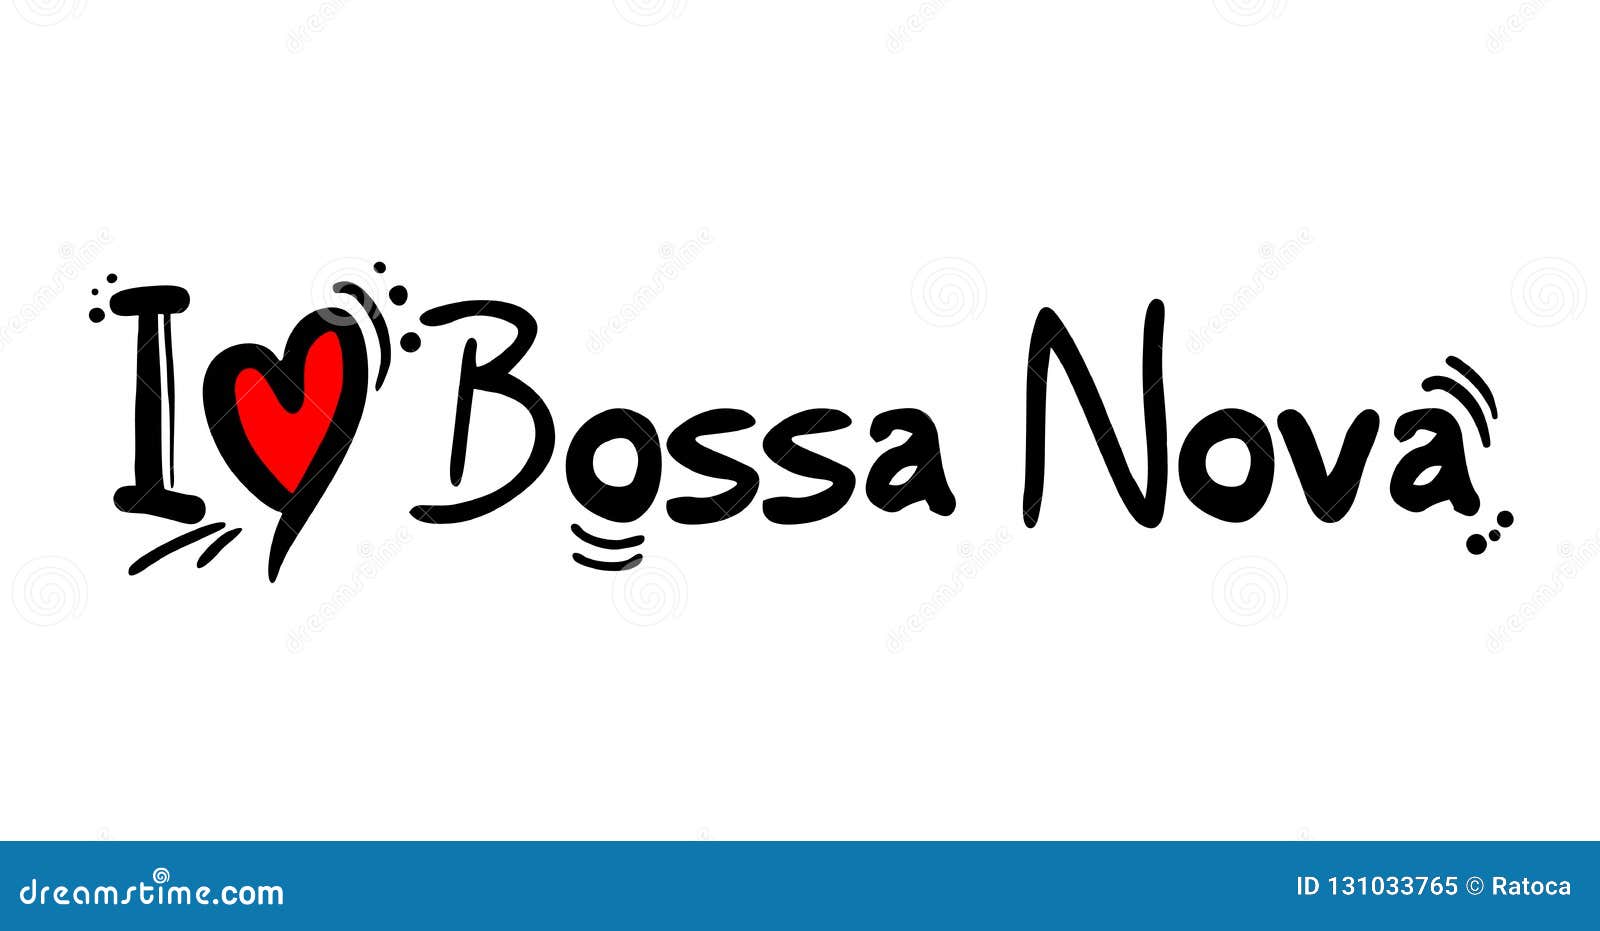 bossa nova music style